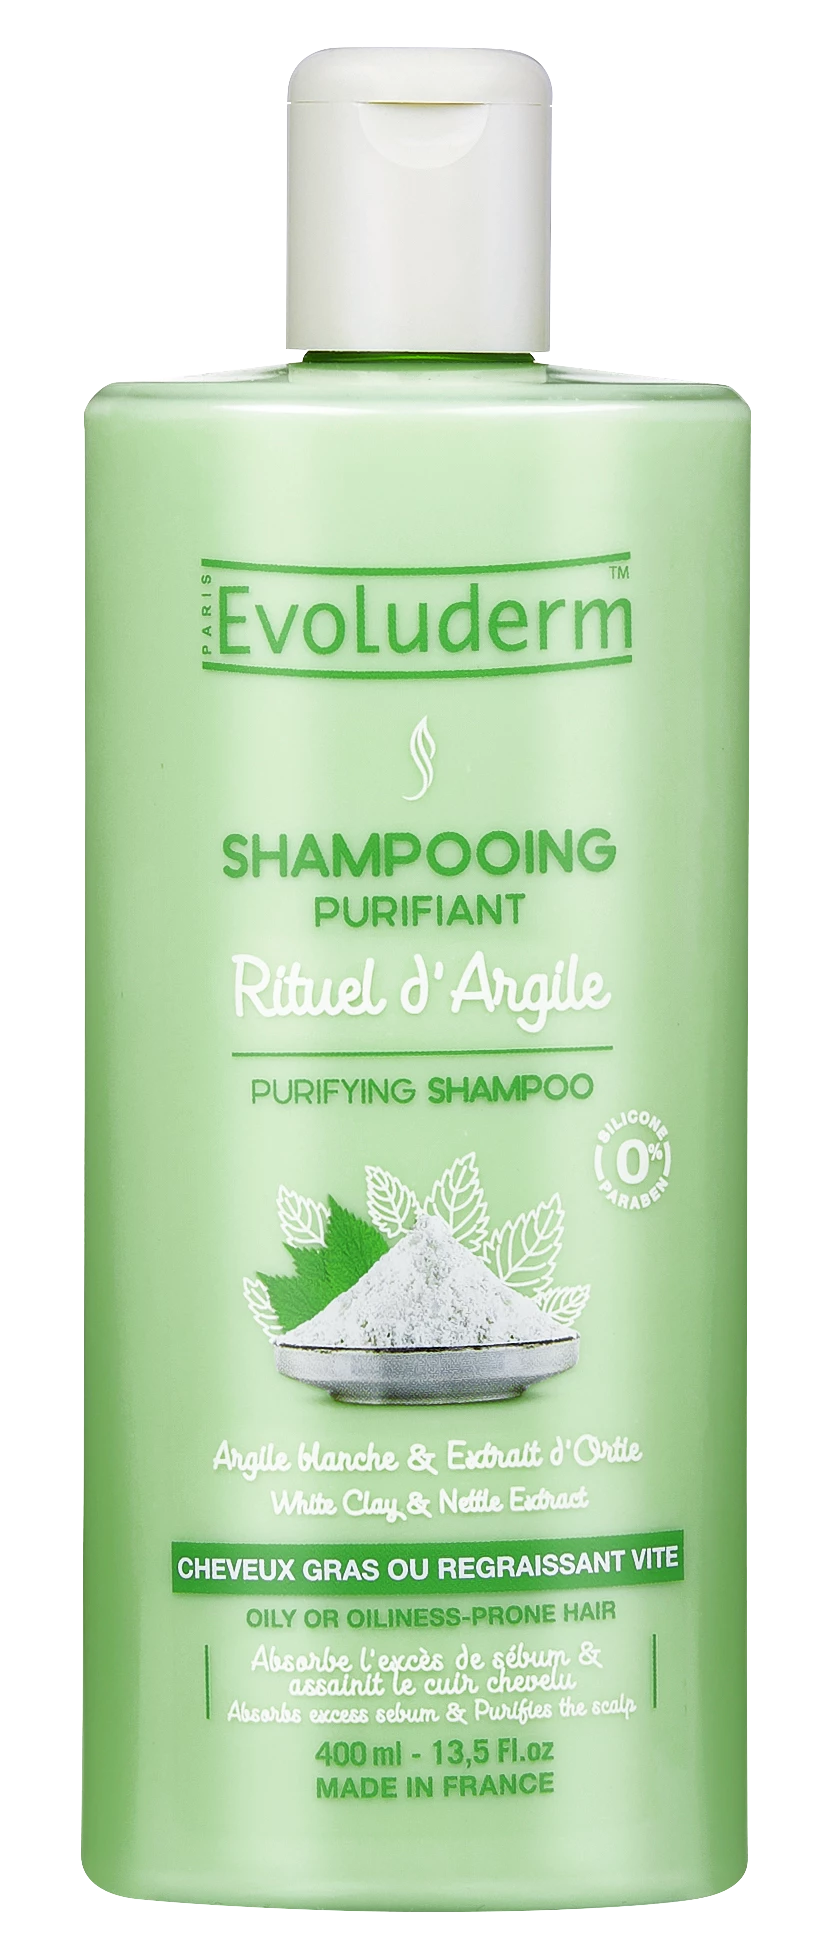 Clay Ritual Purifying Shampoo 400ml - EVOLUDERM